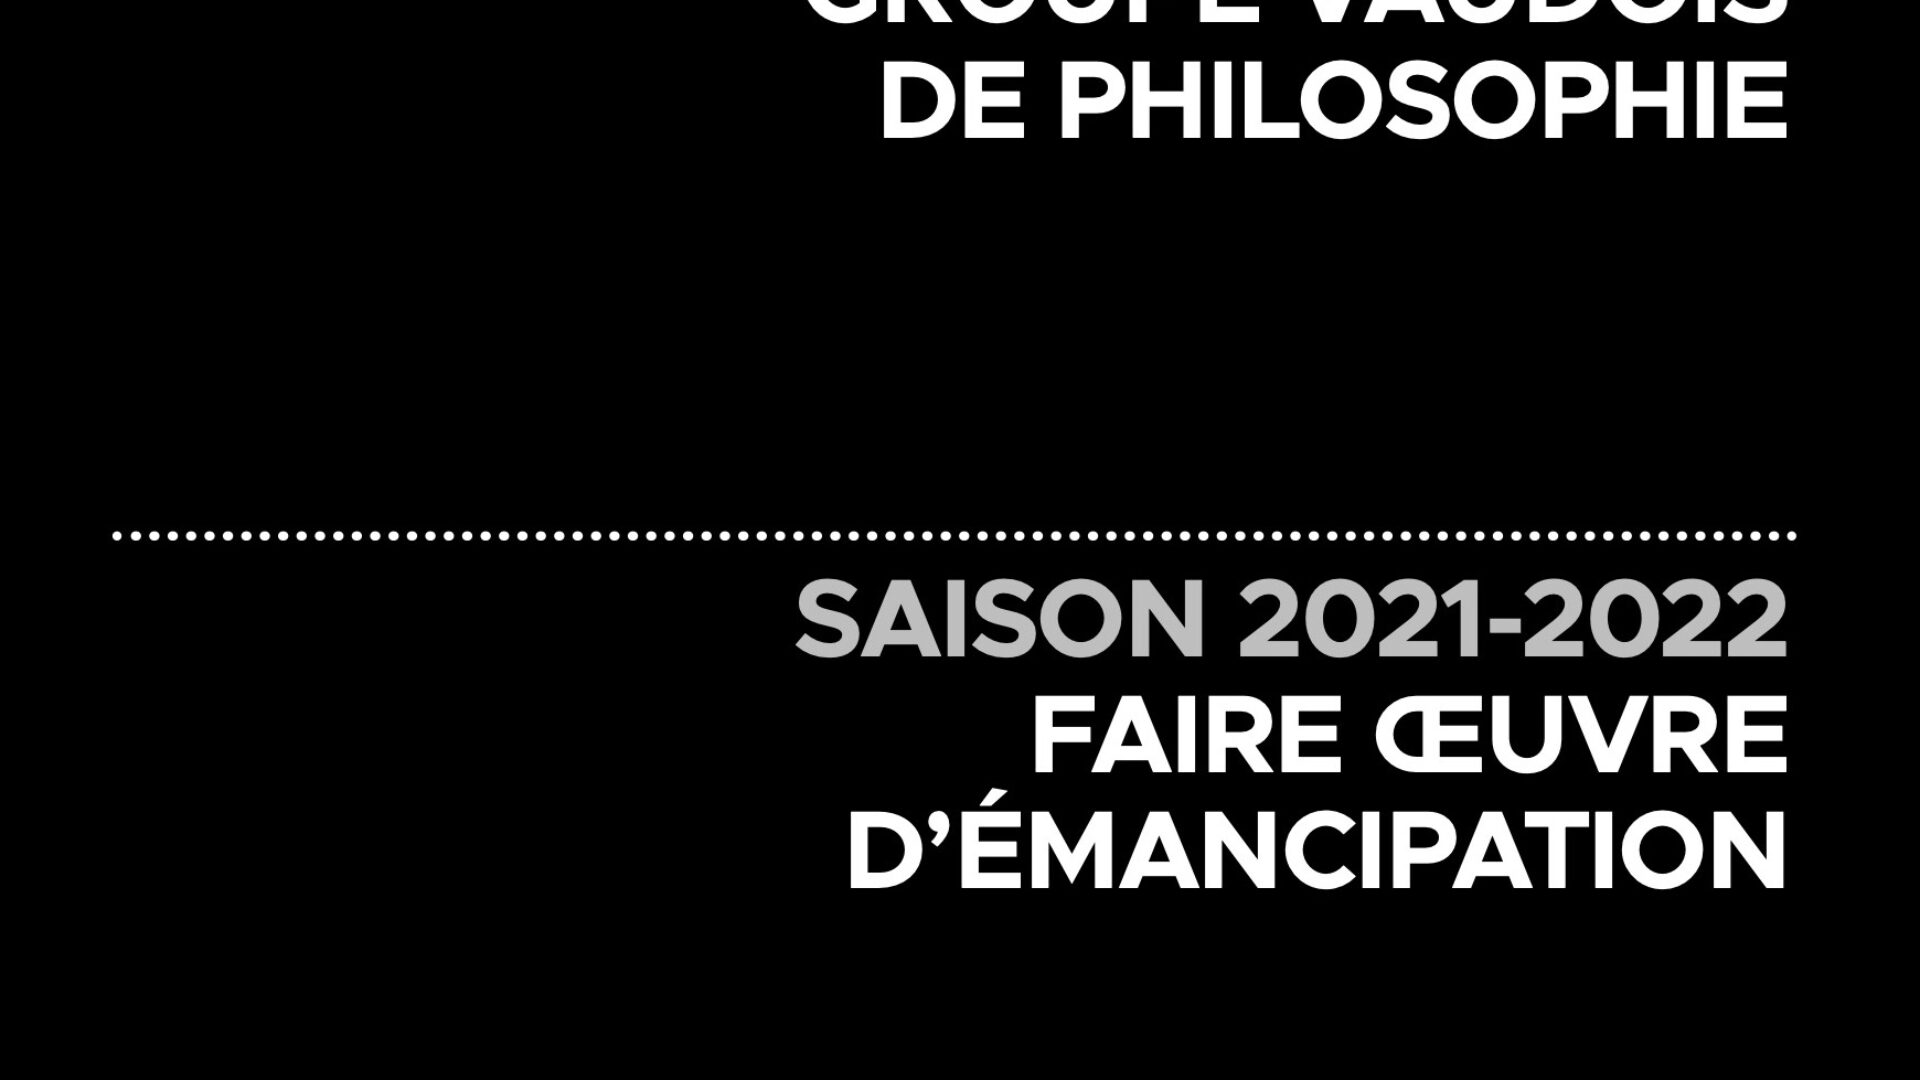 Groupe vaudois de philosophie – Flyer 2021 2022 copie